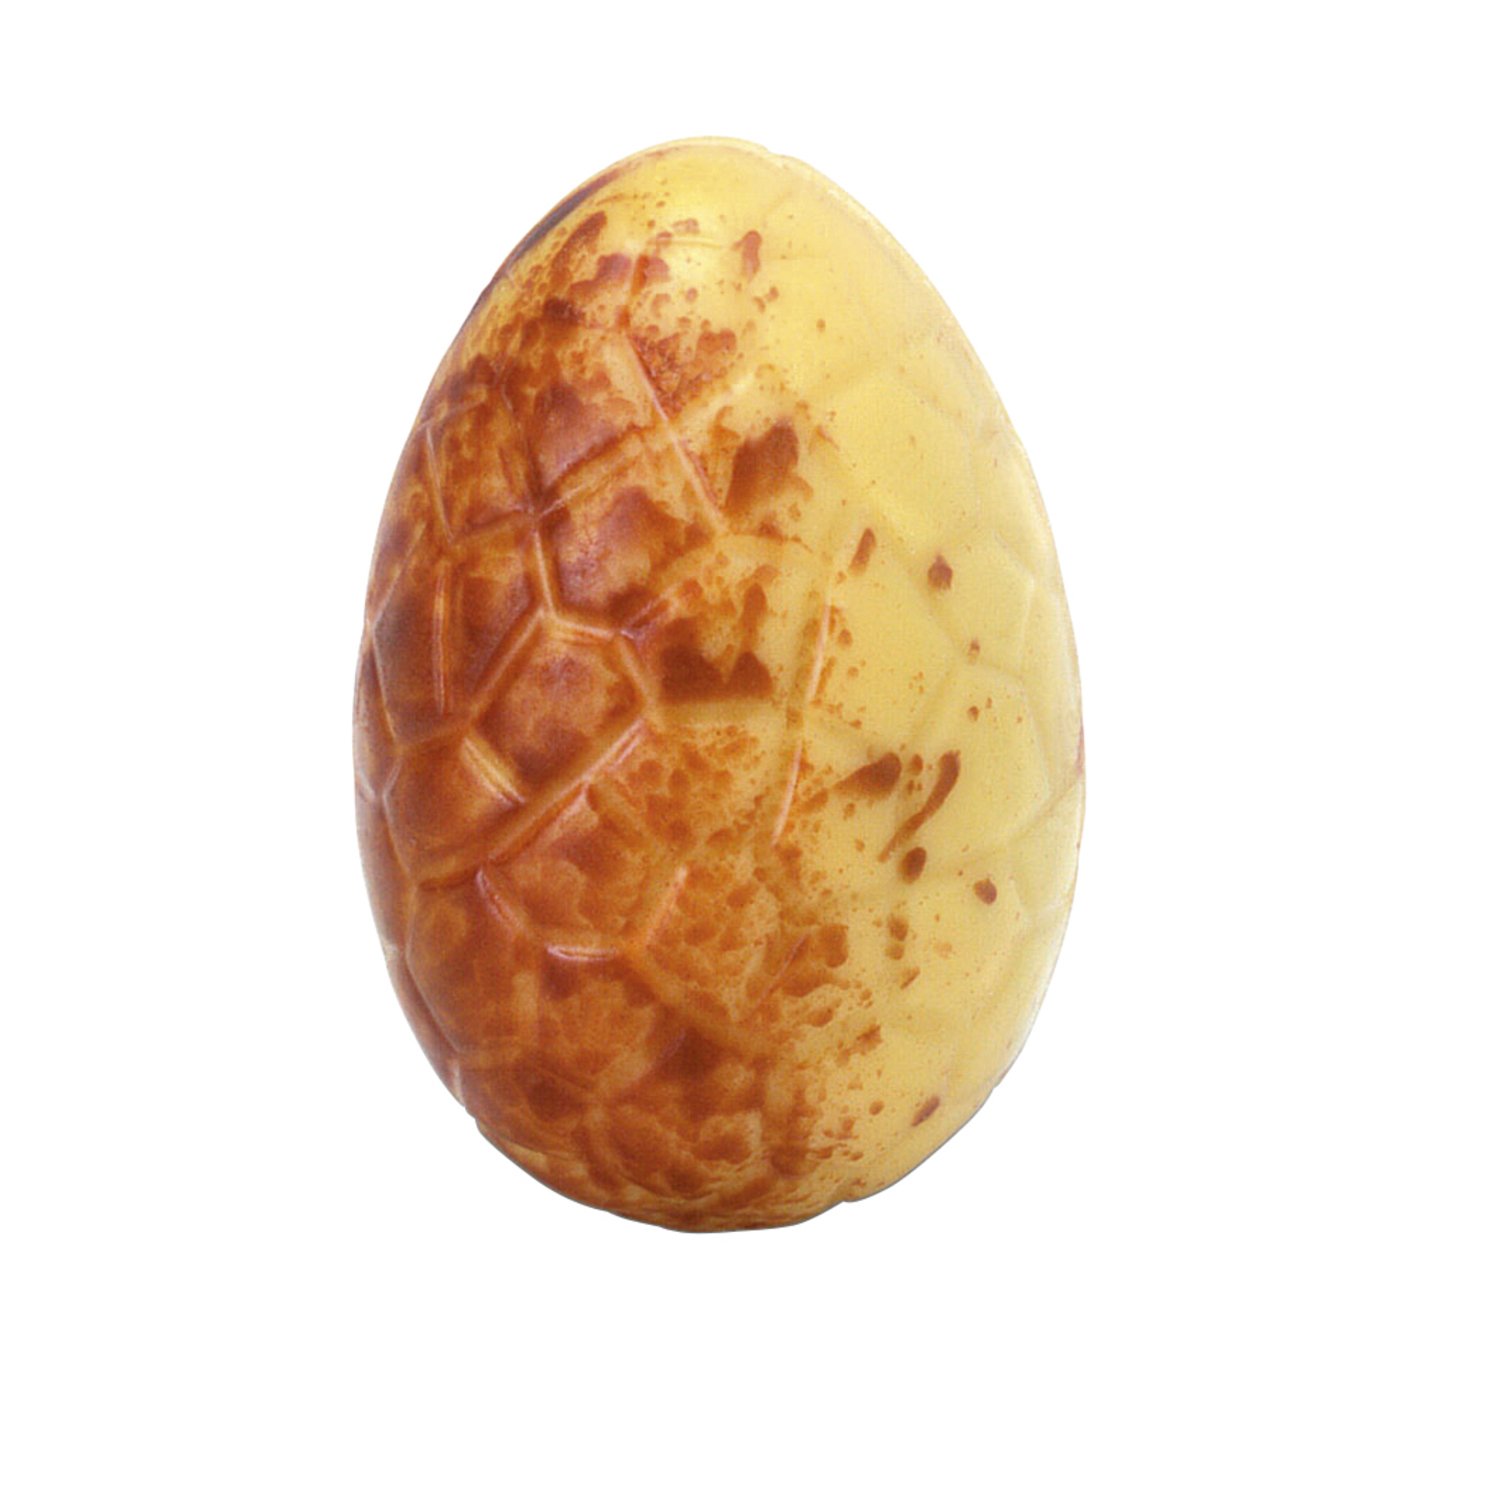 Tiramisu cream filled yellow coloured white choc mini eggs - app 13g - 2.7kg